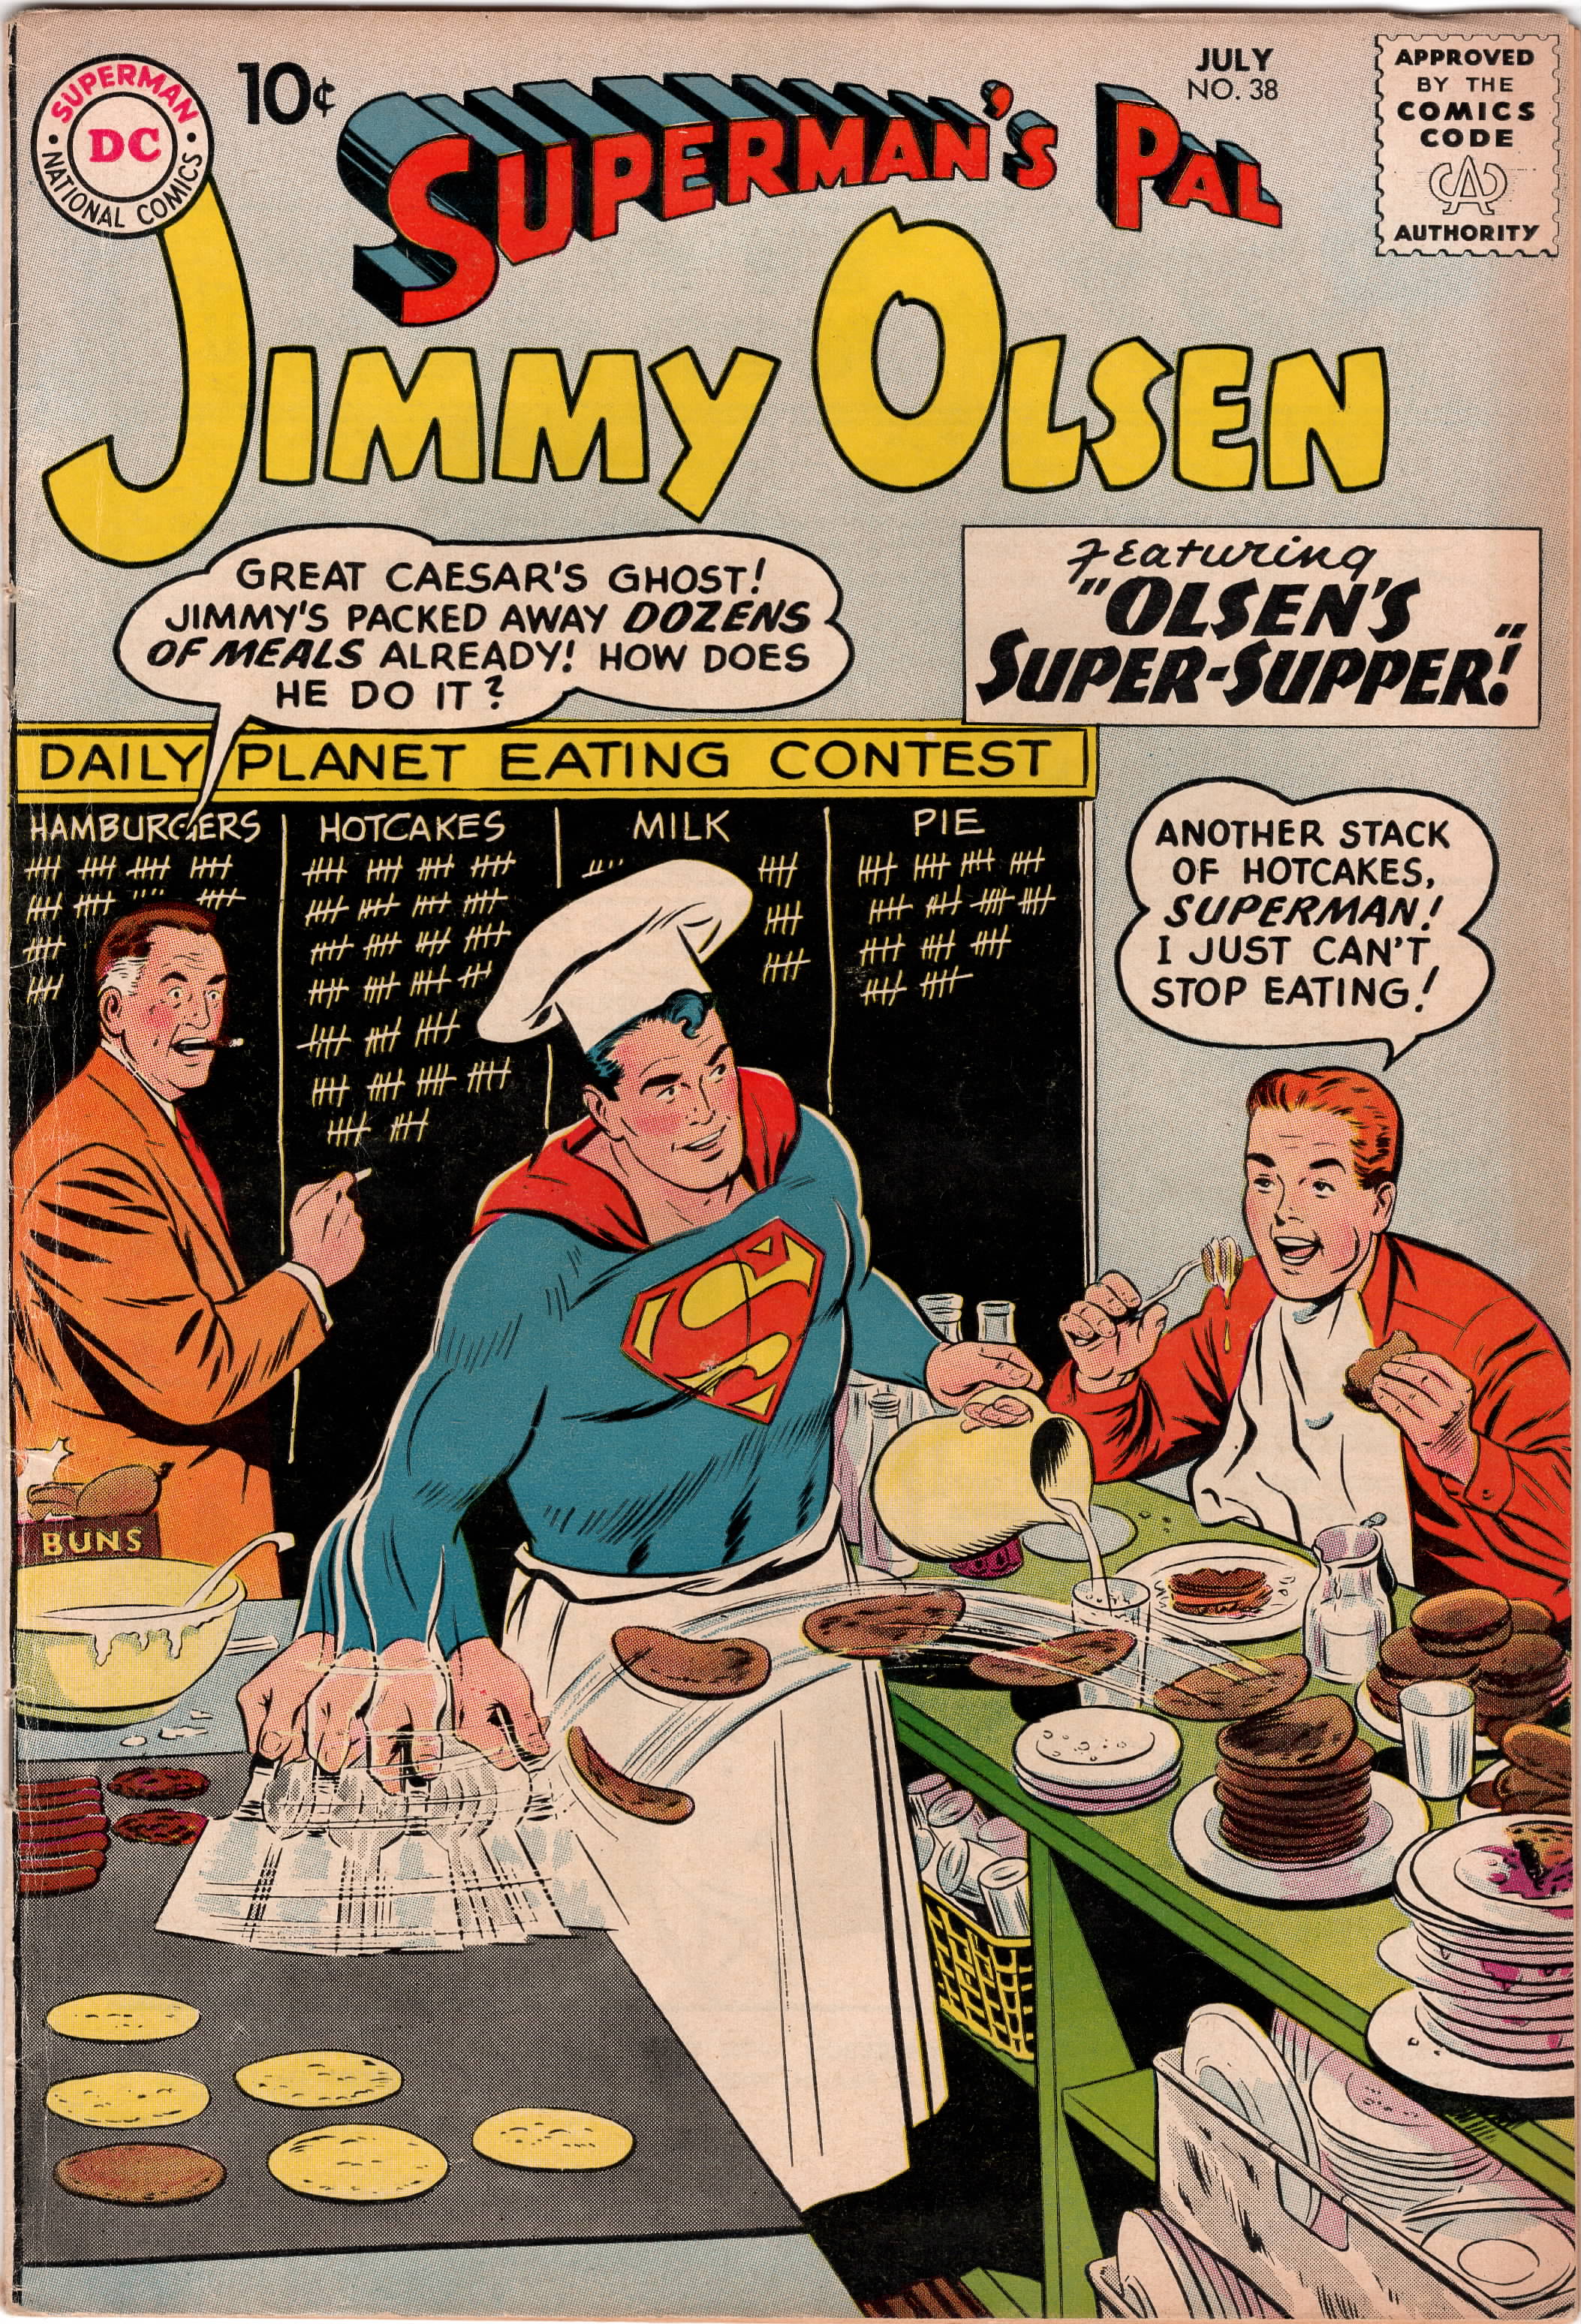 Superman's Pal Jimmy Olsen #038